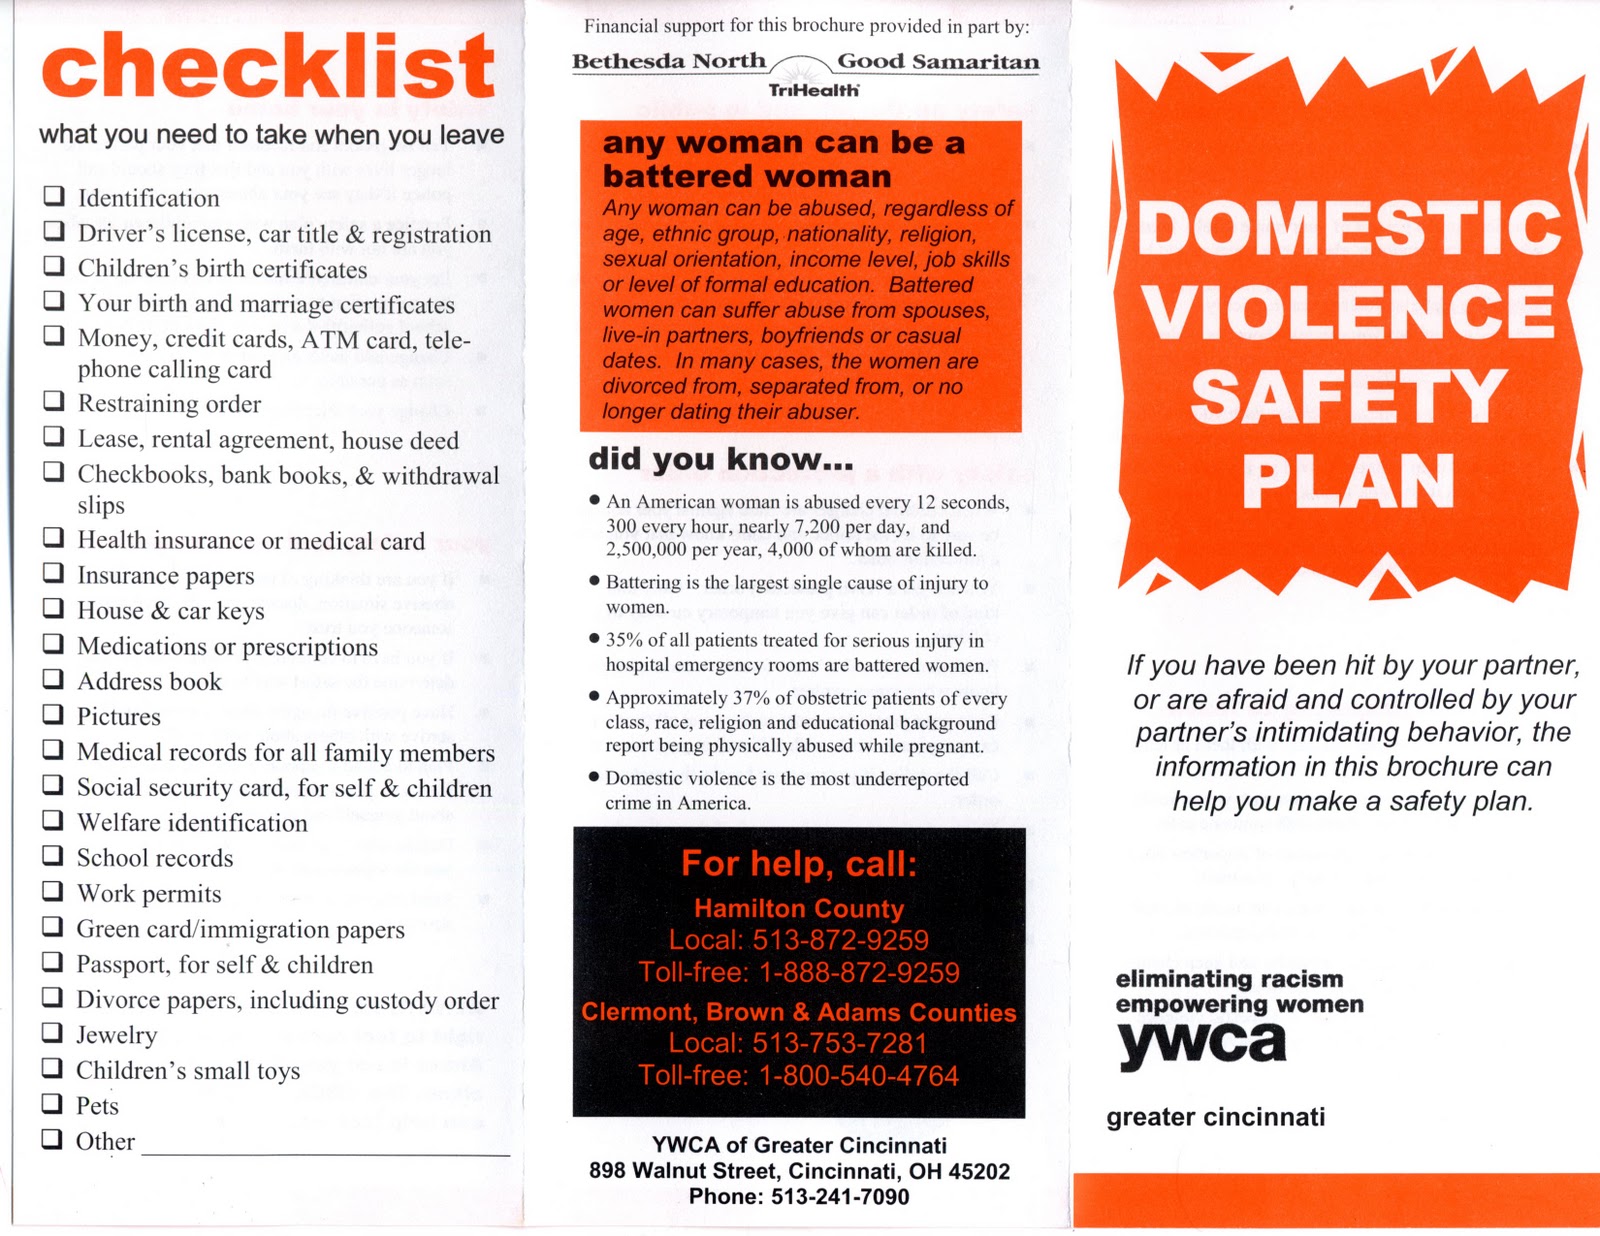 Reclaim At The University Of Cincinnati Domestic Violence Safety Plan 